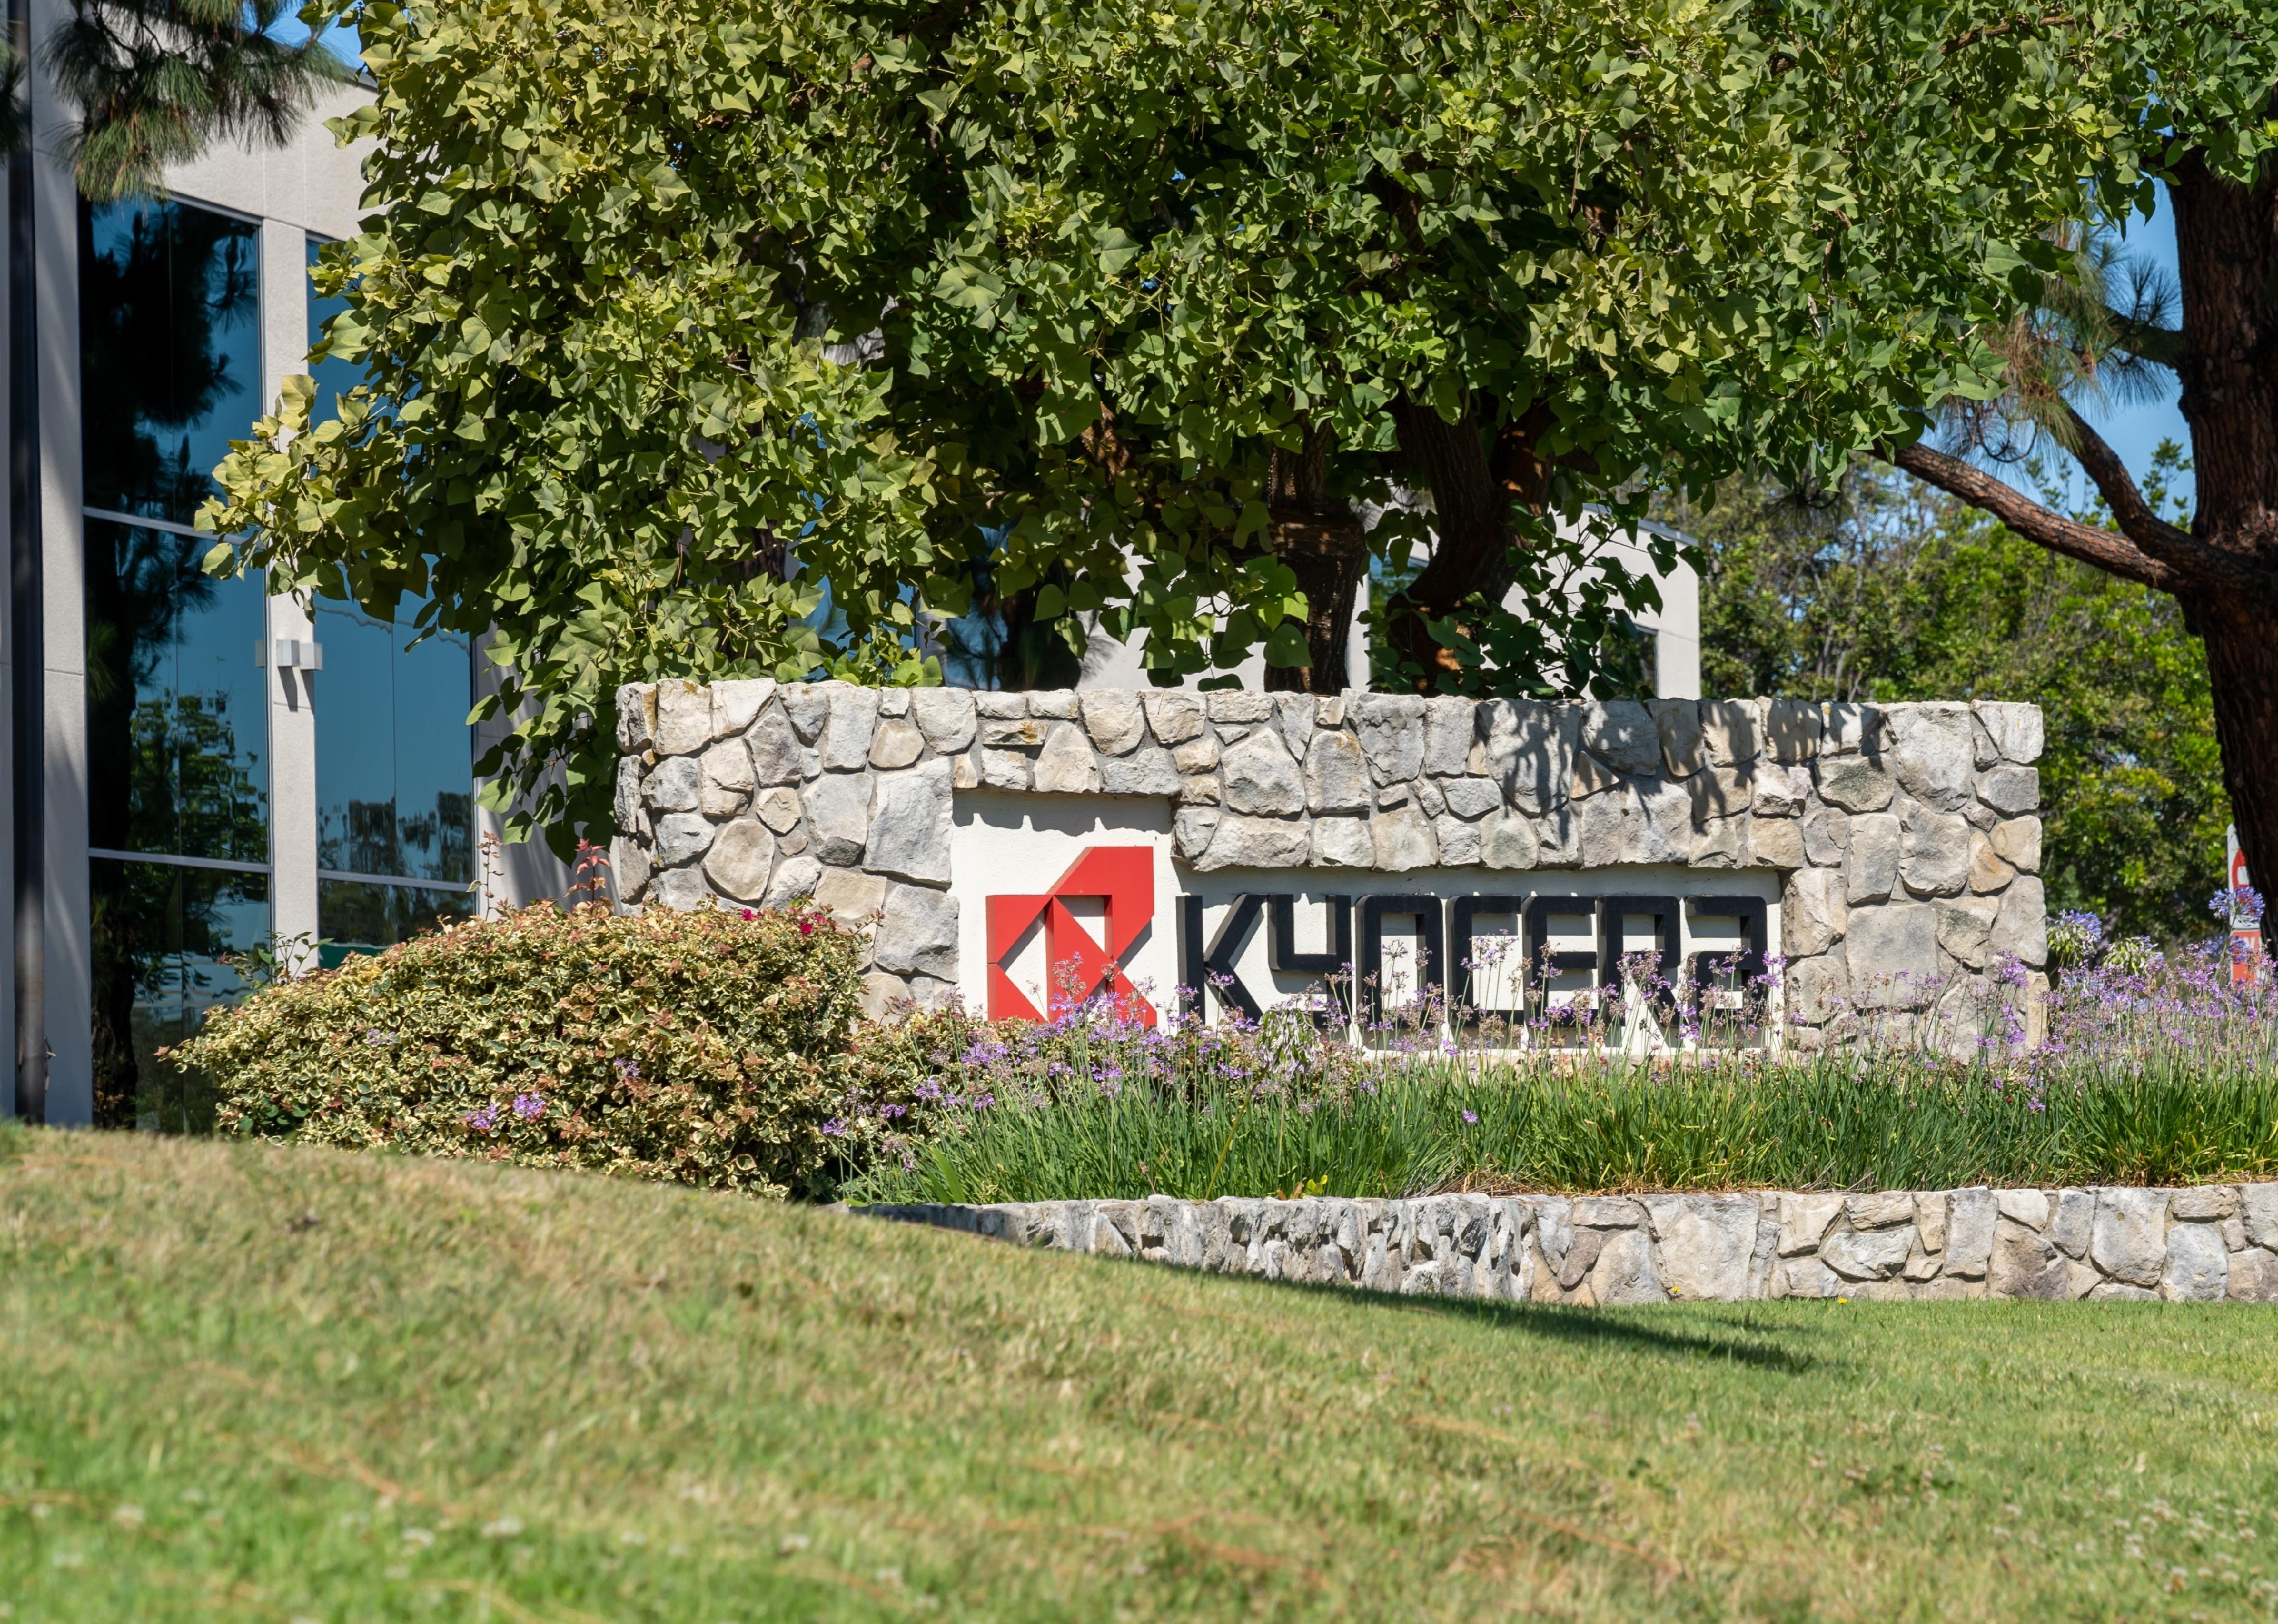 Kyocera International headquarters sign.